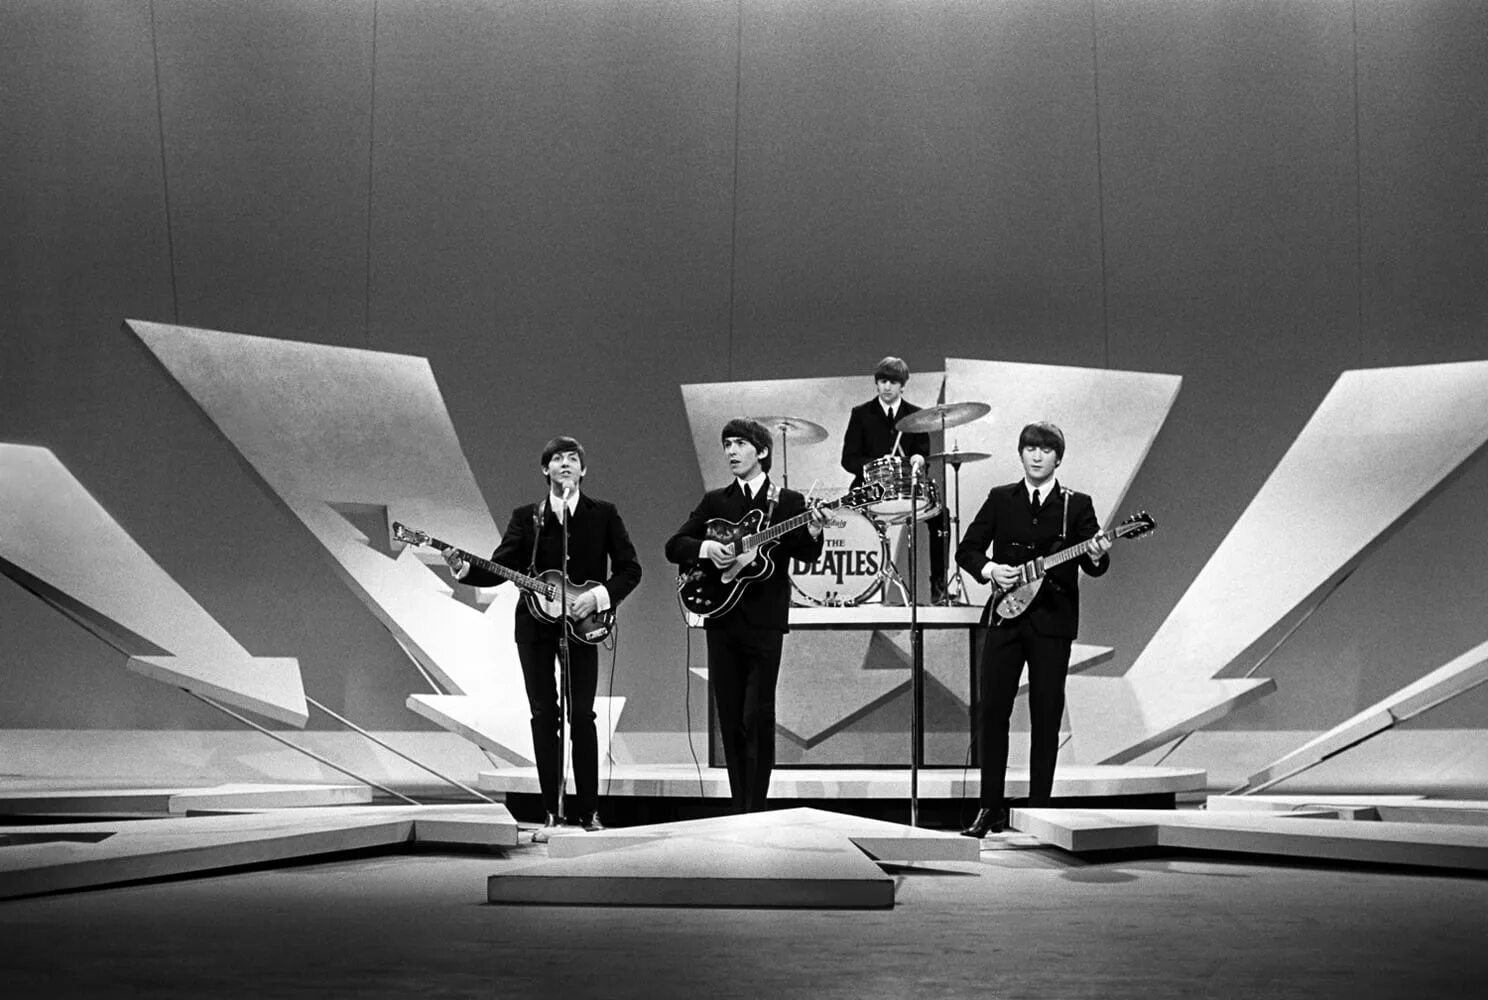 The Beatles 1964. The Beatles ed Sullivan show. Ed show